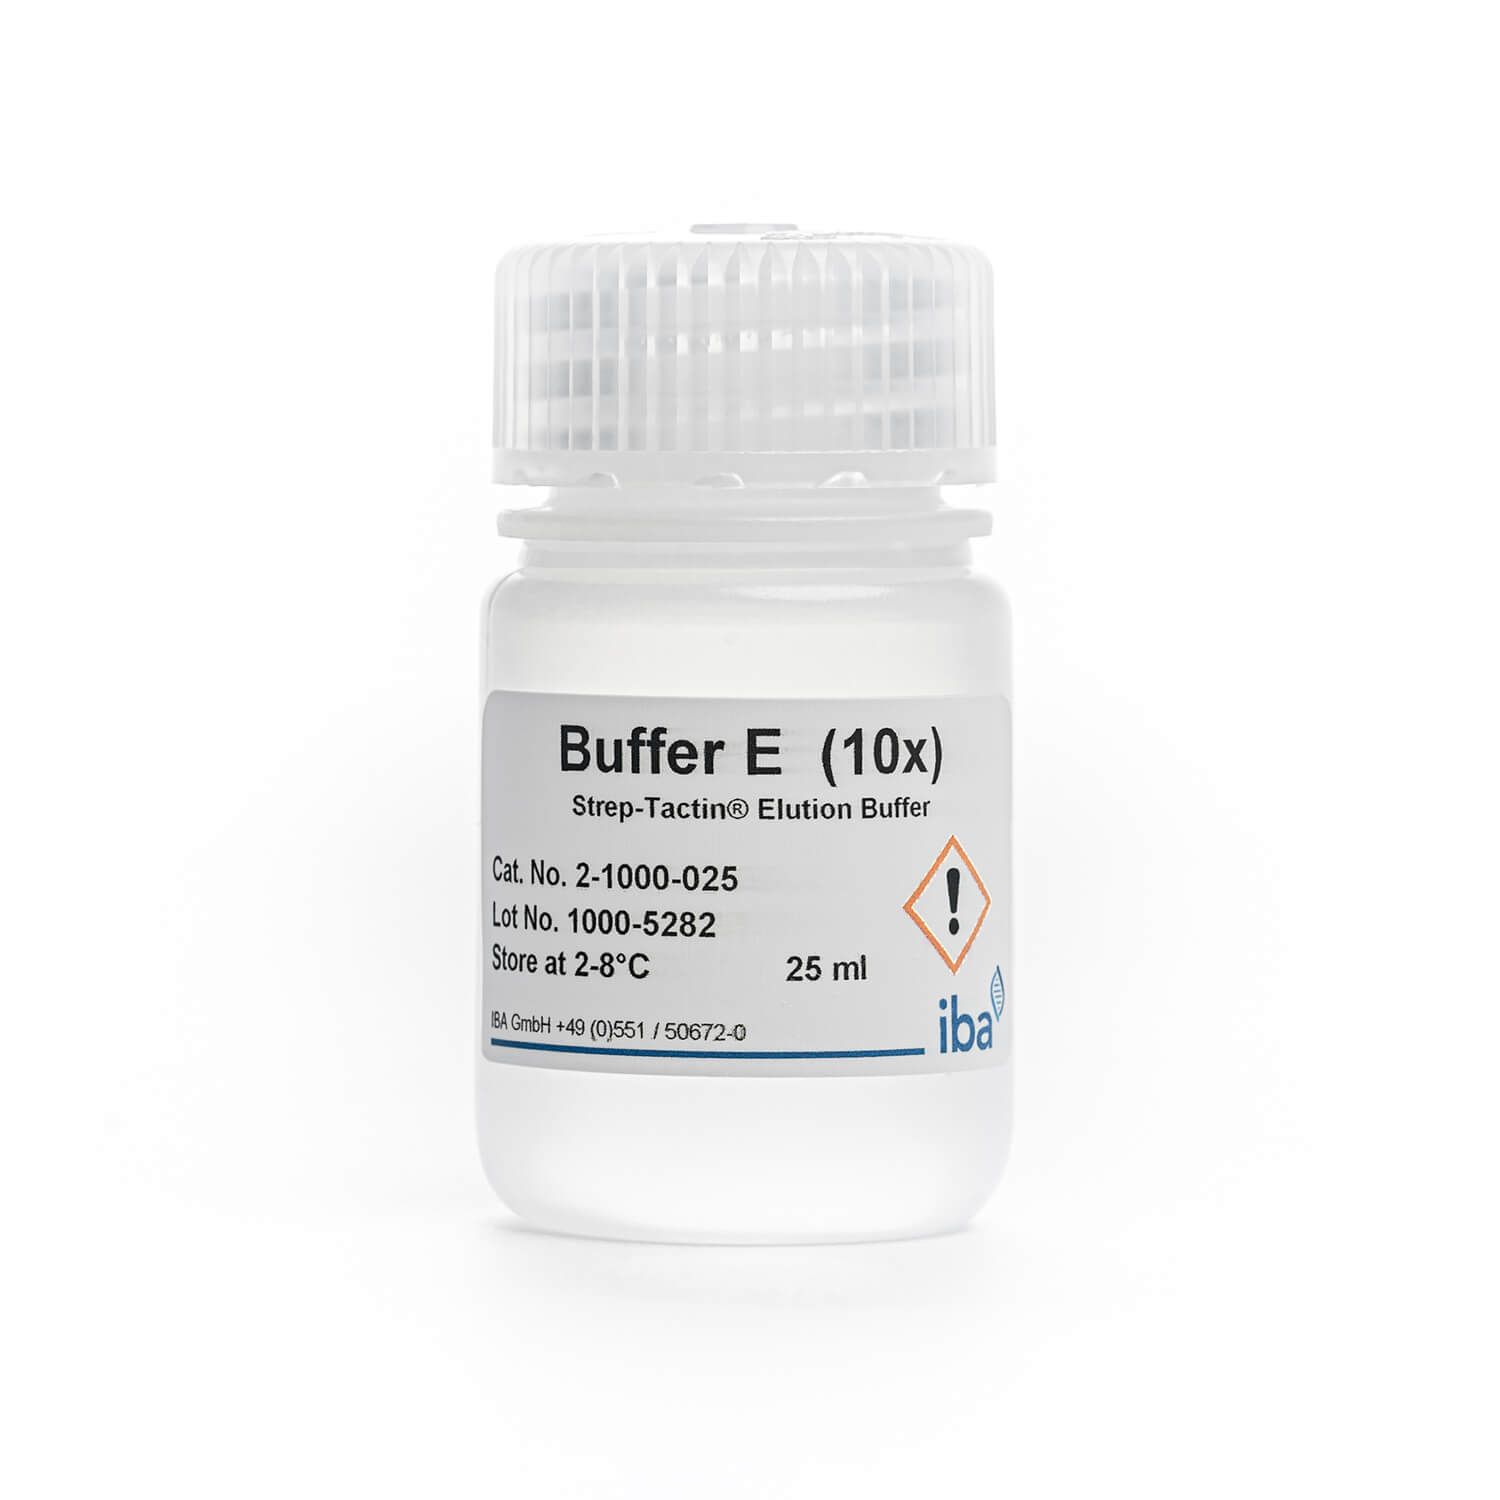 10x Buffer E; Strep-Tactin® Elution Buffer with Desthiobiotin